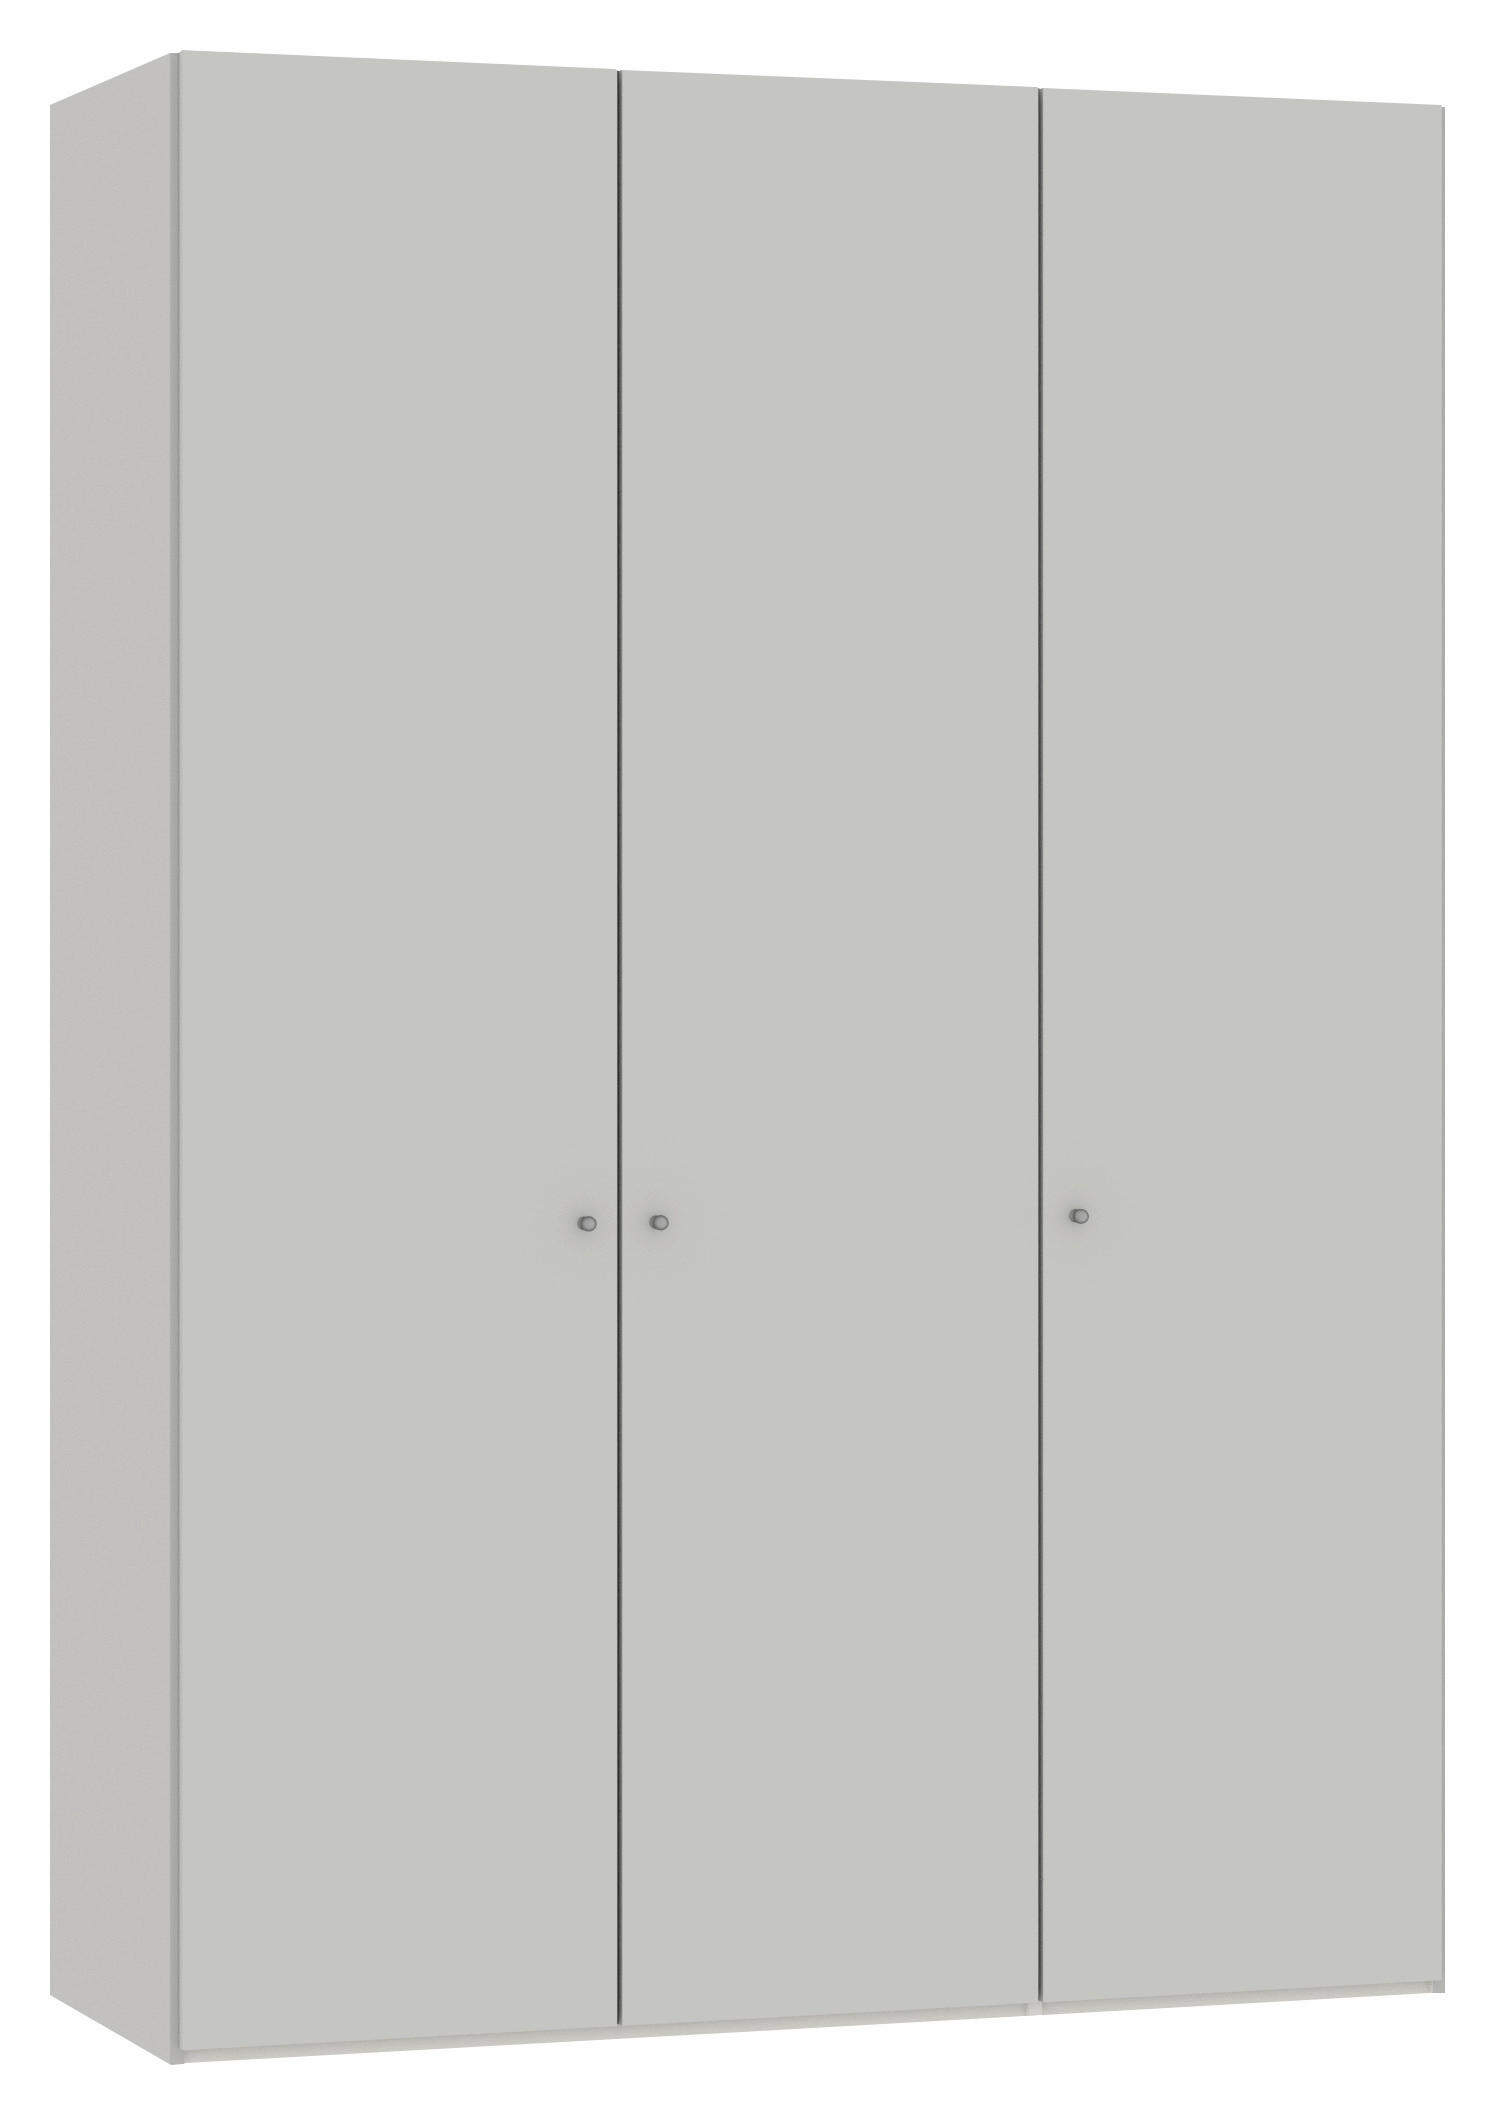 DREHTÜRENSCHRANK 152/220/59 cm 3-türig  - Silberfarben/Hellgrau, Design, Holzwerkstoff/Metall (152/220/59cm) - Jutzler